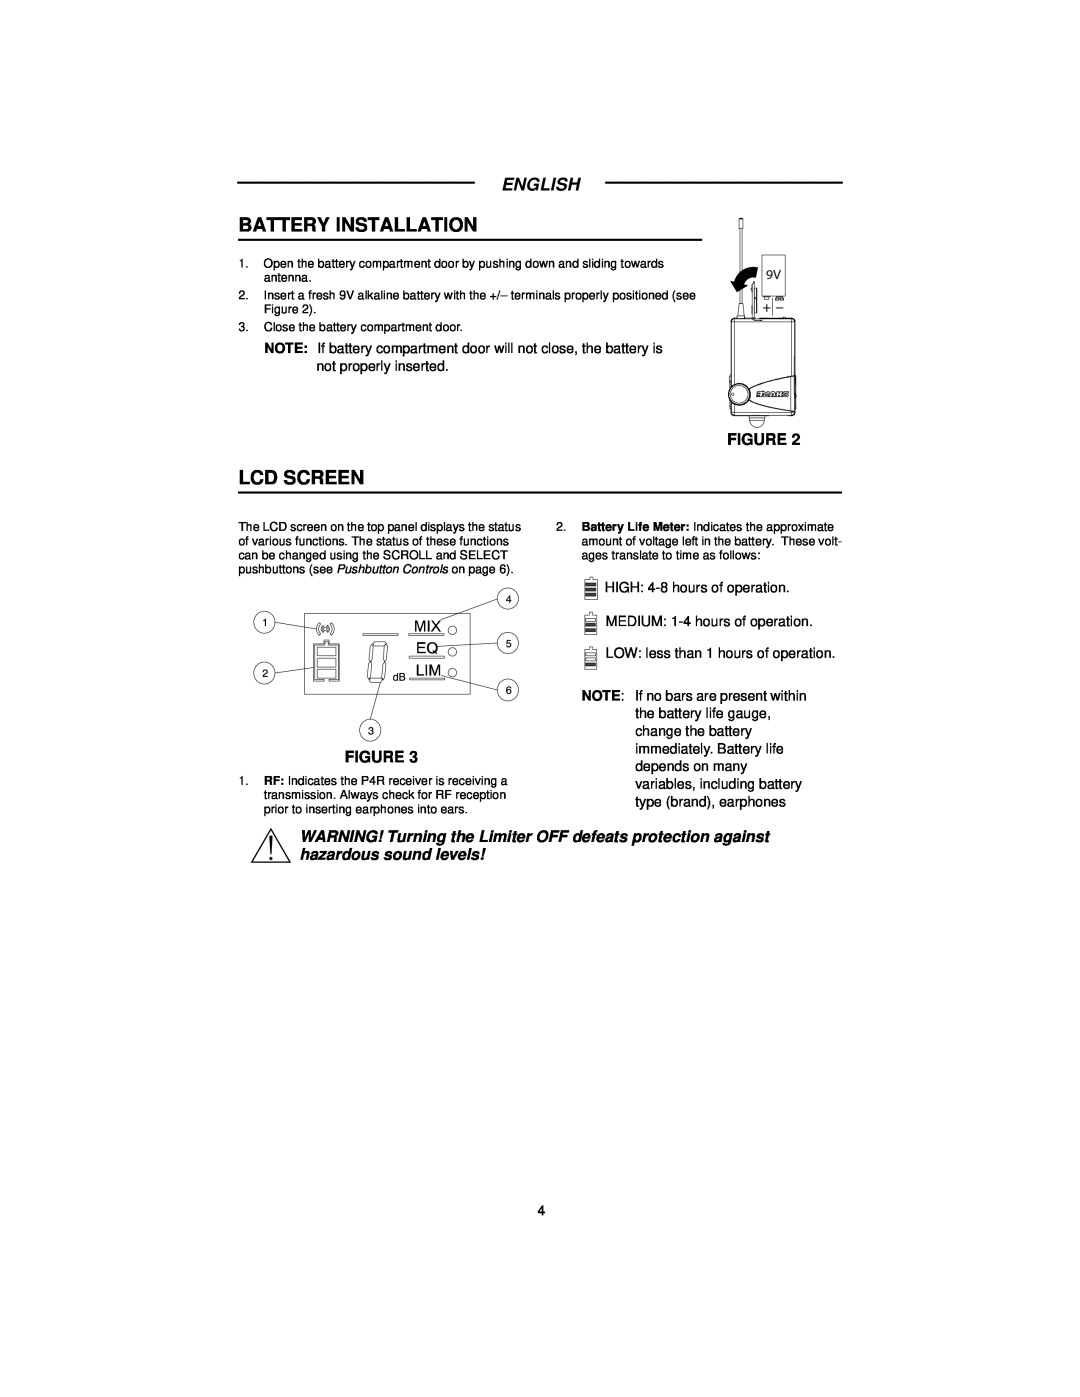 Shure P4R manual Battery Installation, Lcd Screen, English 